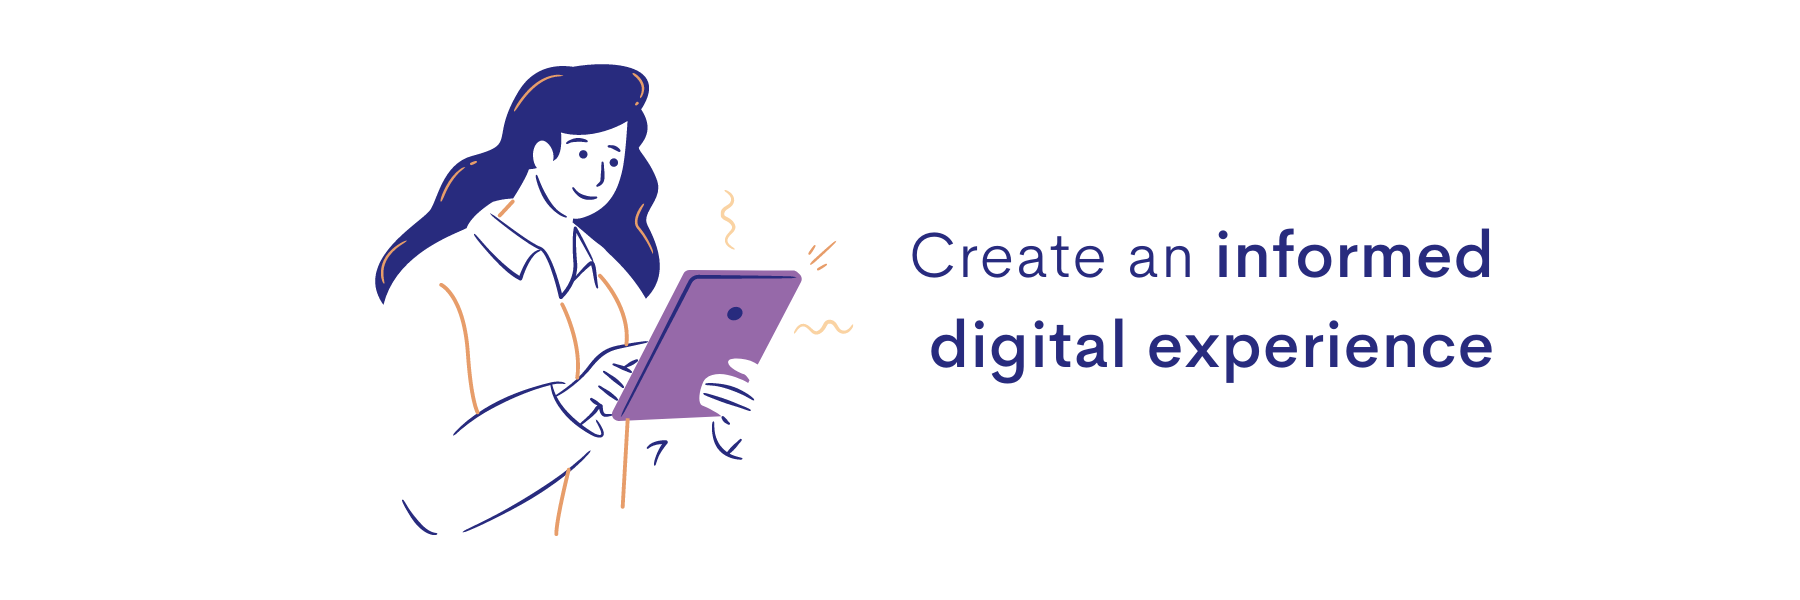 Create an informed digital experience